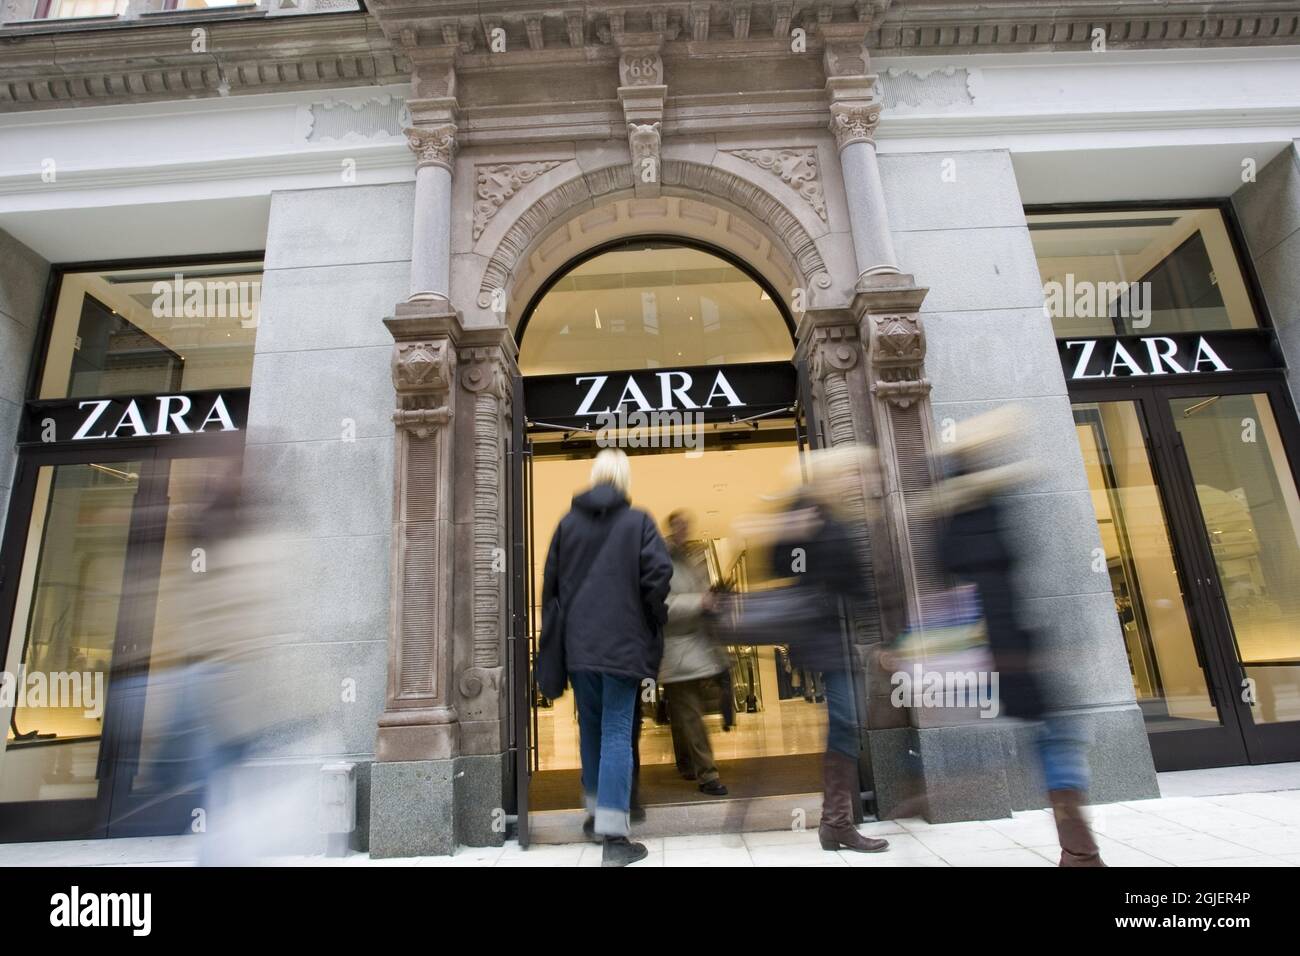 Spanish clothing store Zara in Drottninggatan, Stockholm Stock Photo - Alamy